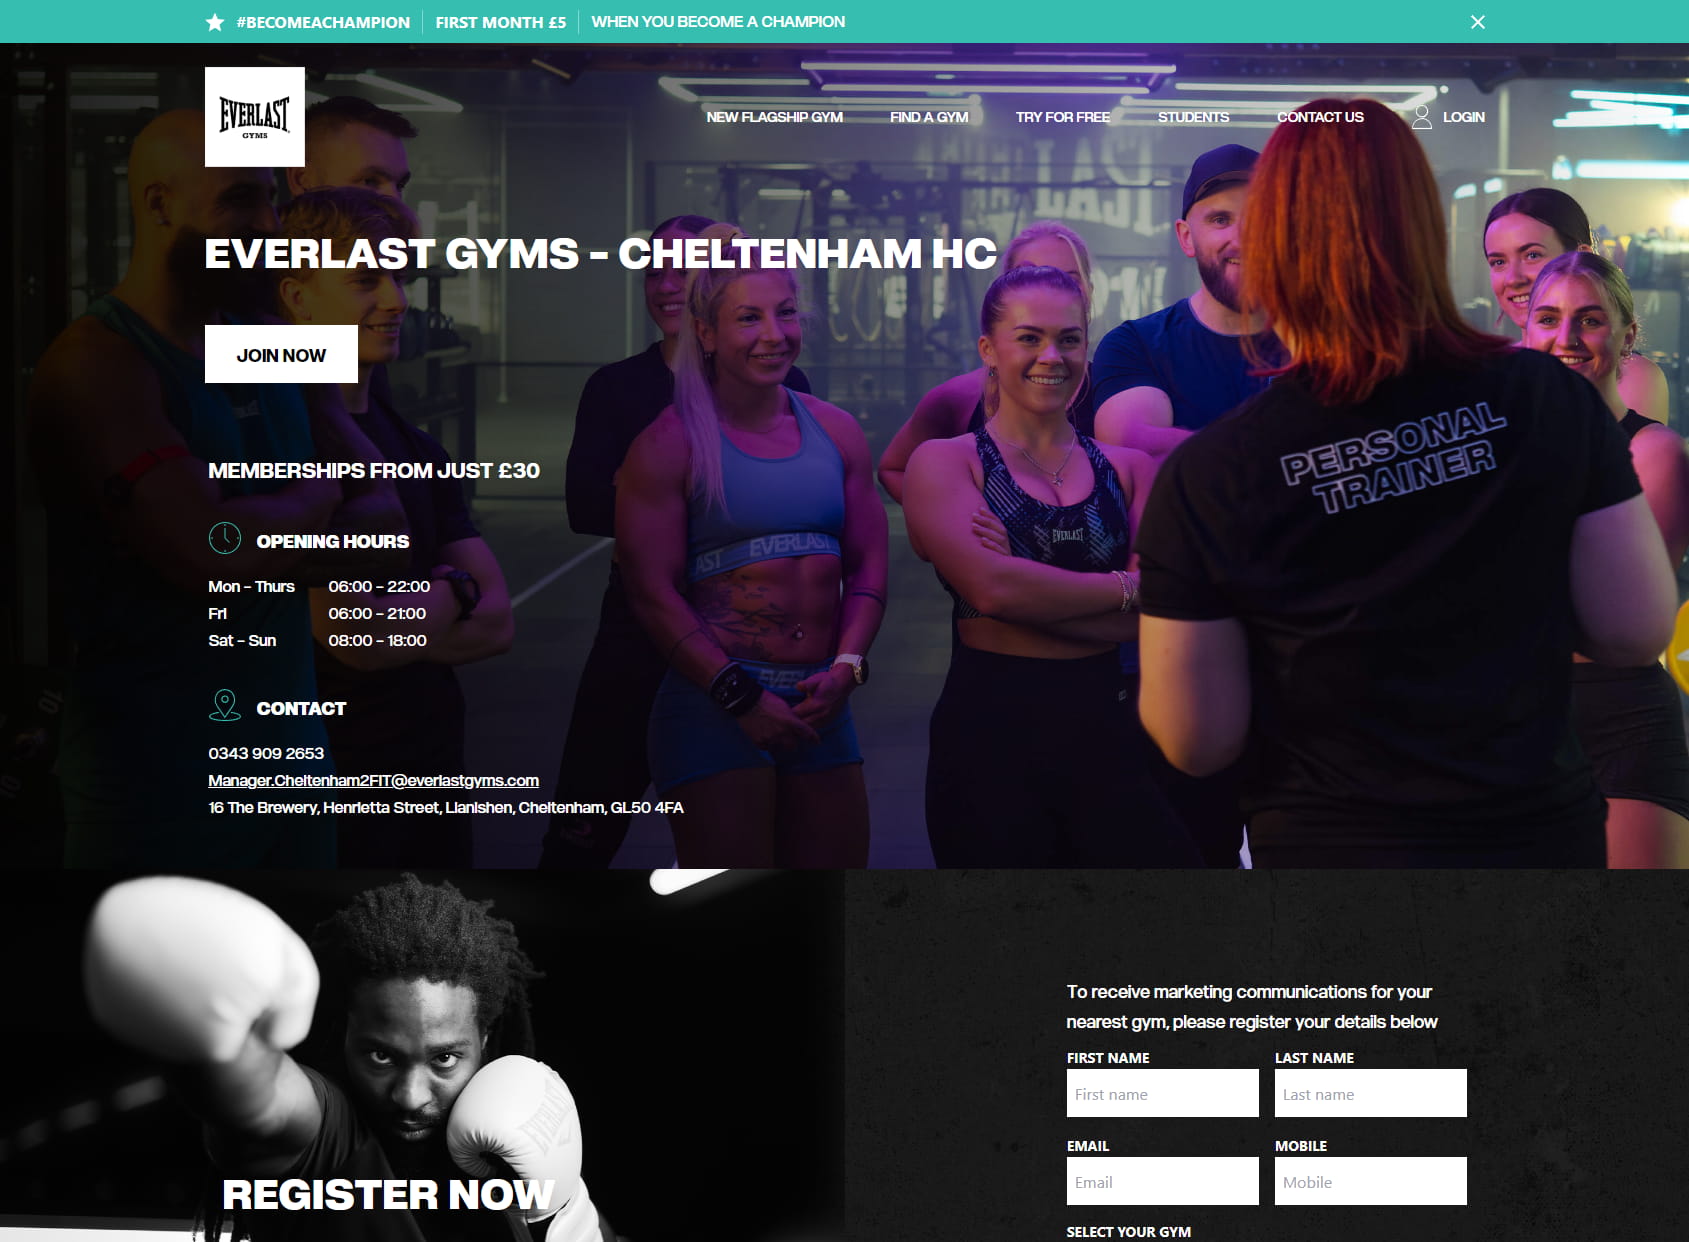 Everlast Gyms - Cheltenham HC